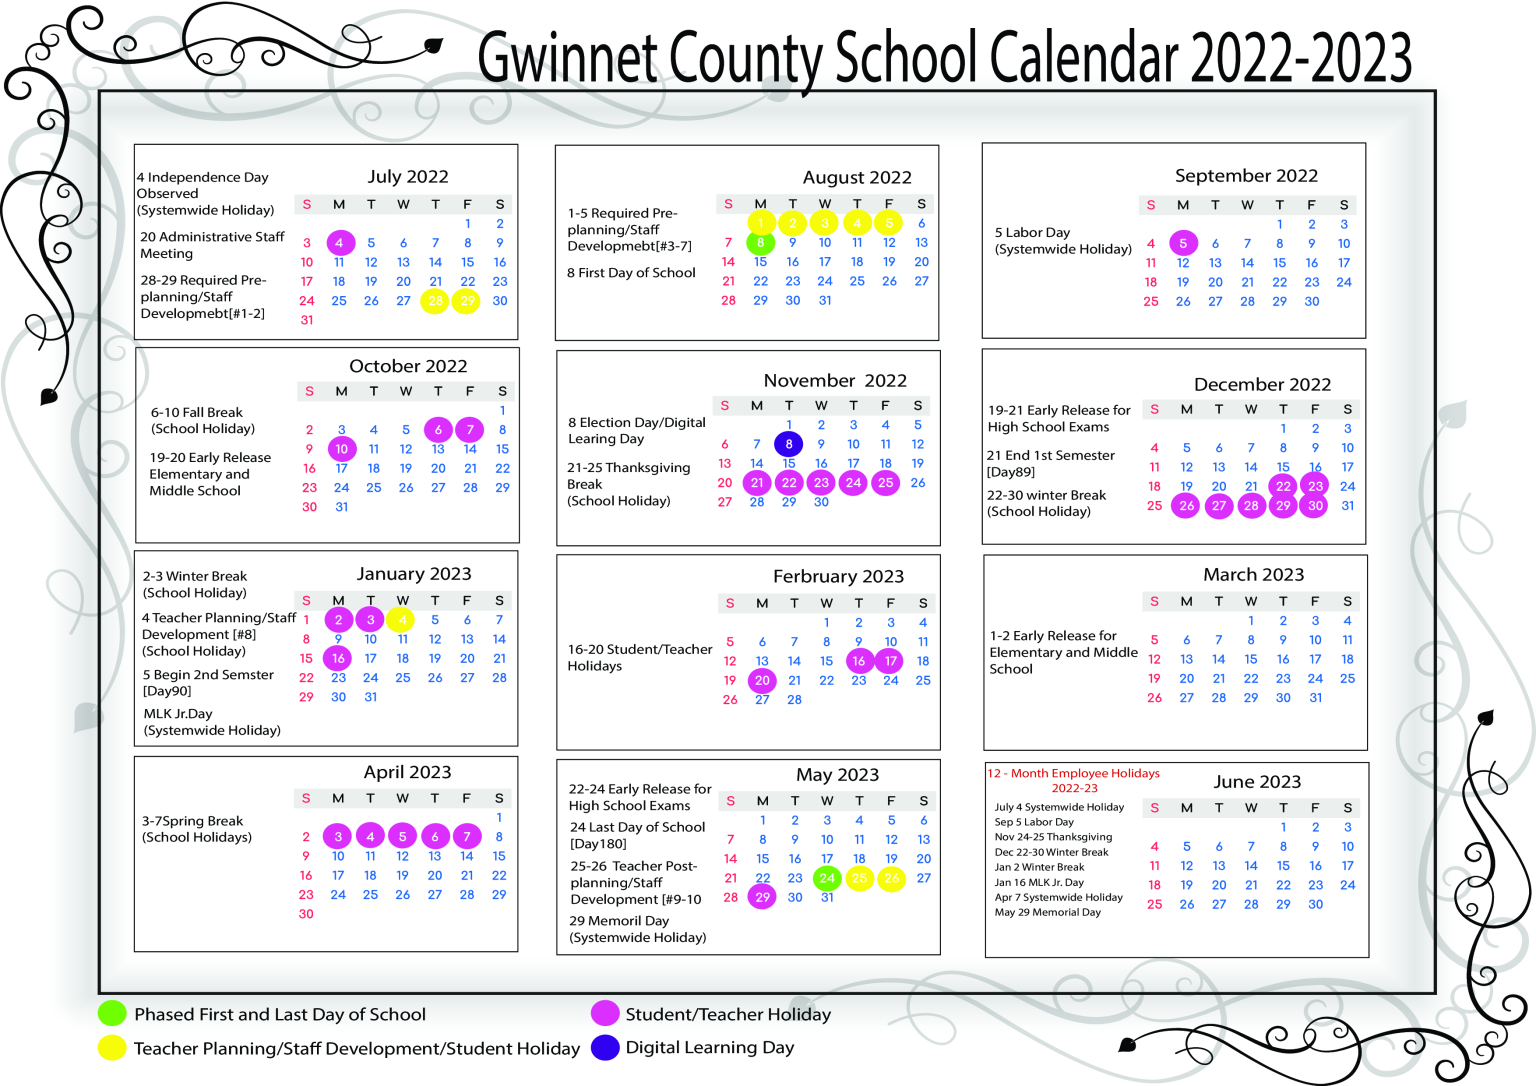 Gwinnett County School Calendar with Holidays 2022-2023 [GCPS]